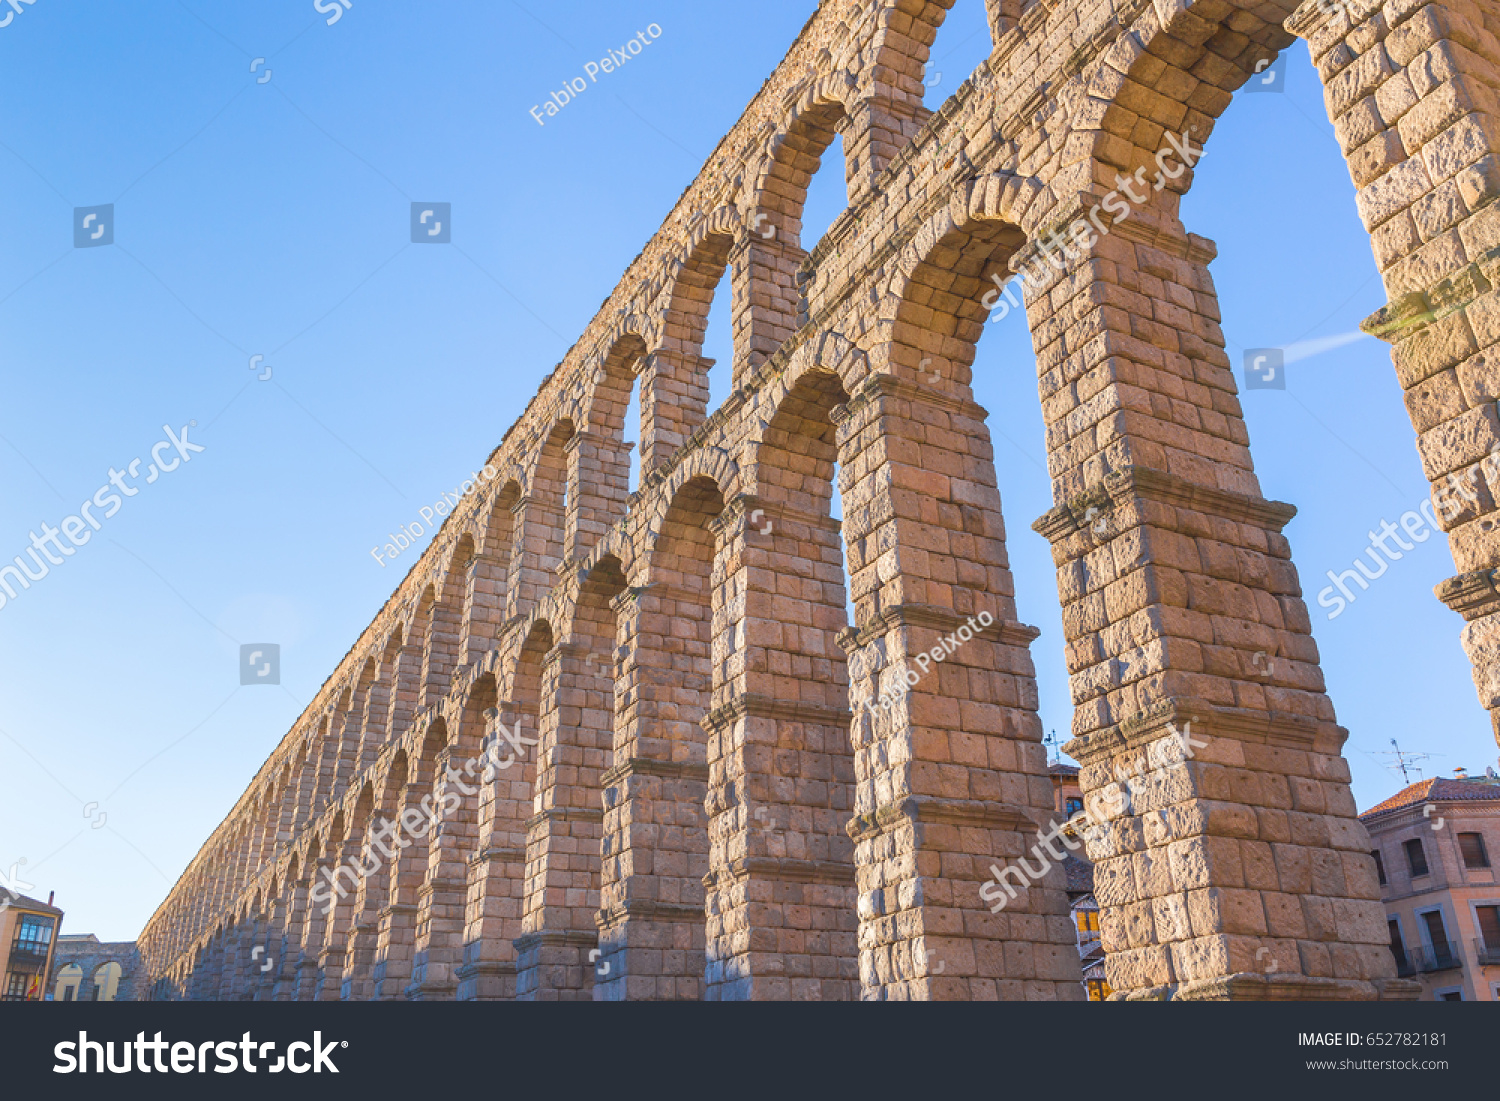 View at Plaza del Azoguejo and the ancient Roman aqueduct in Segovia, Spain V #652782181